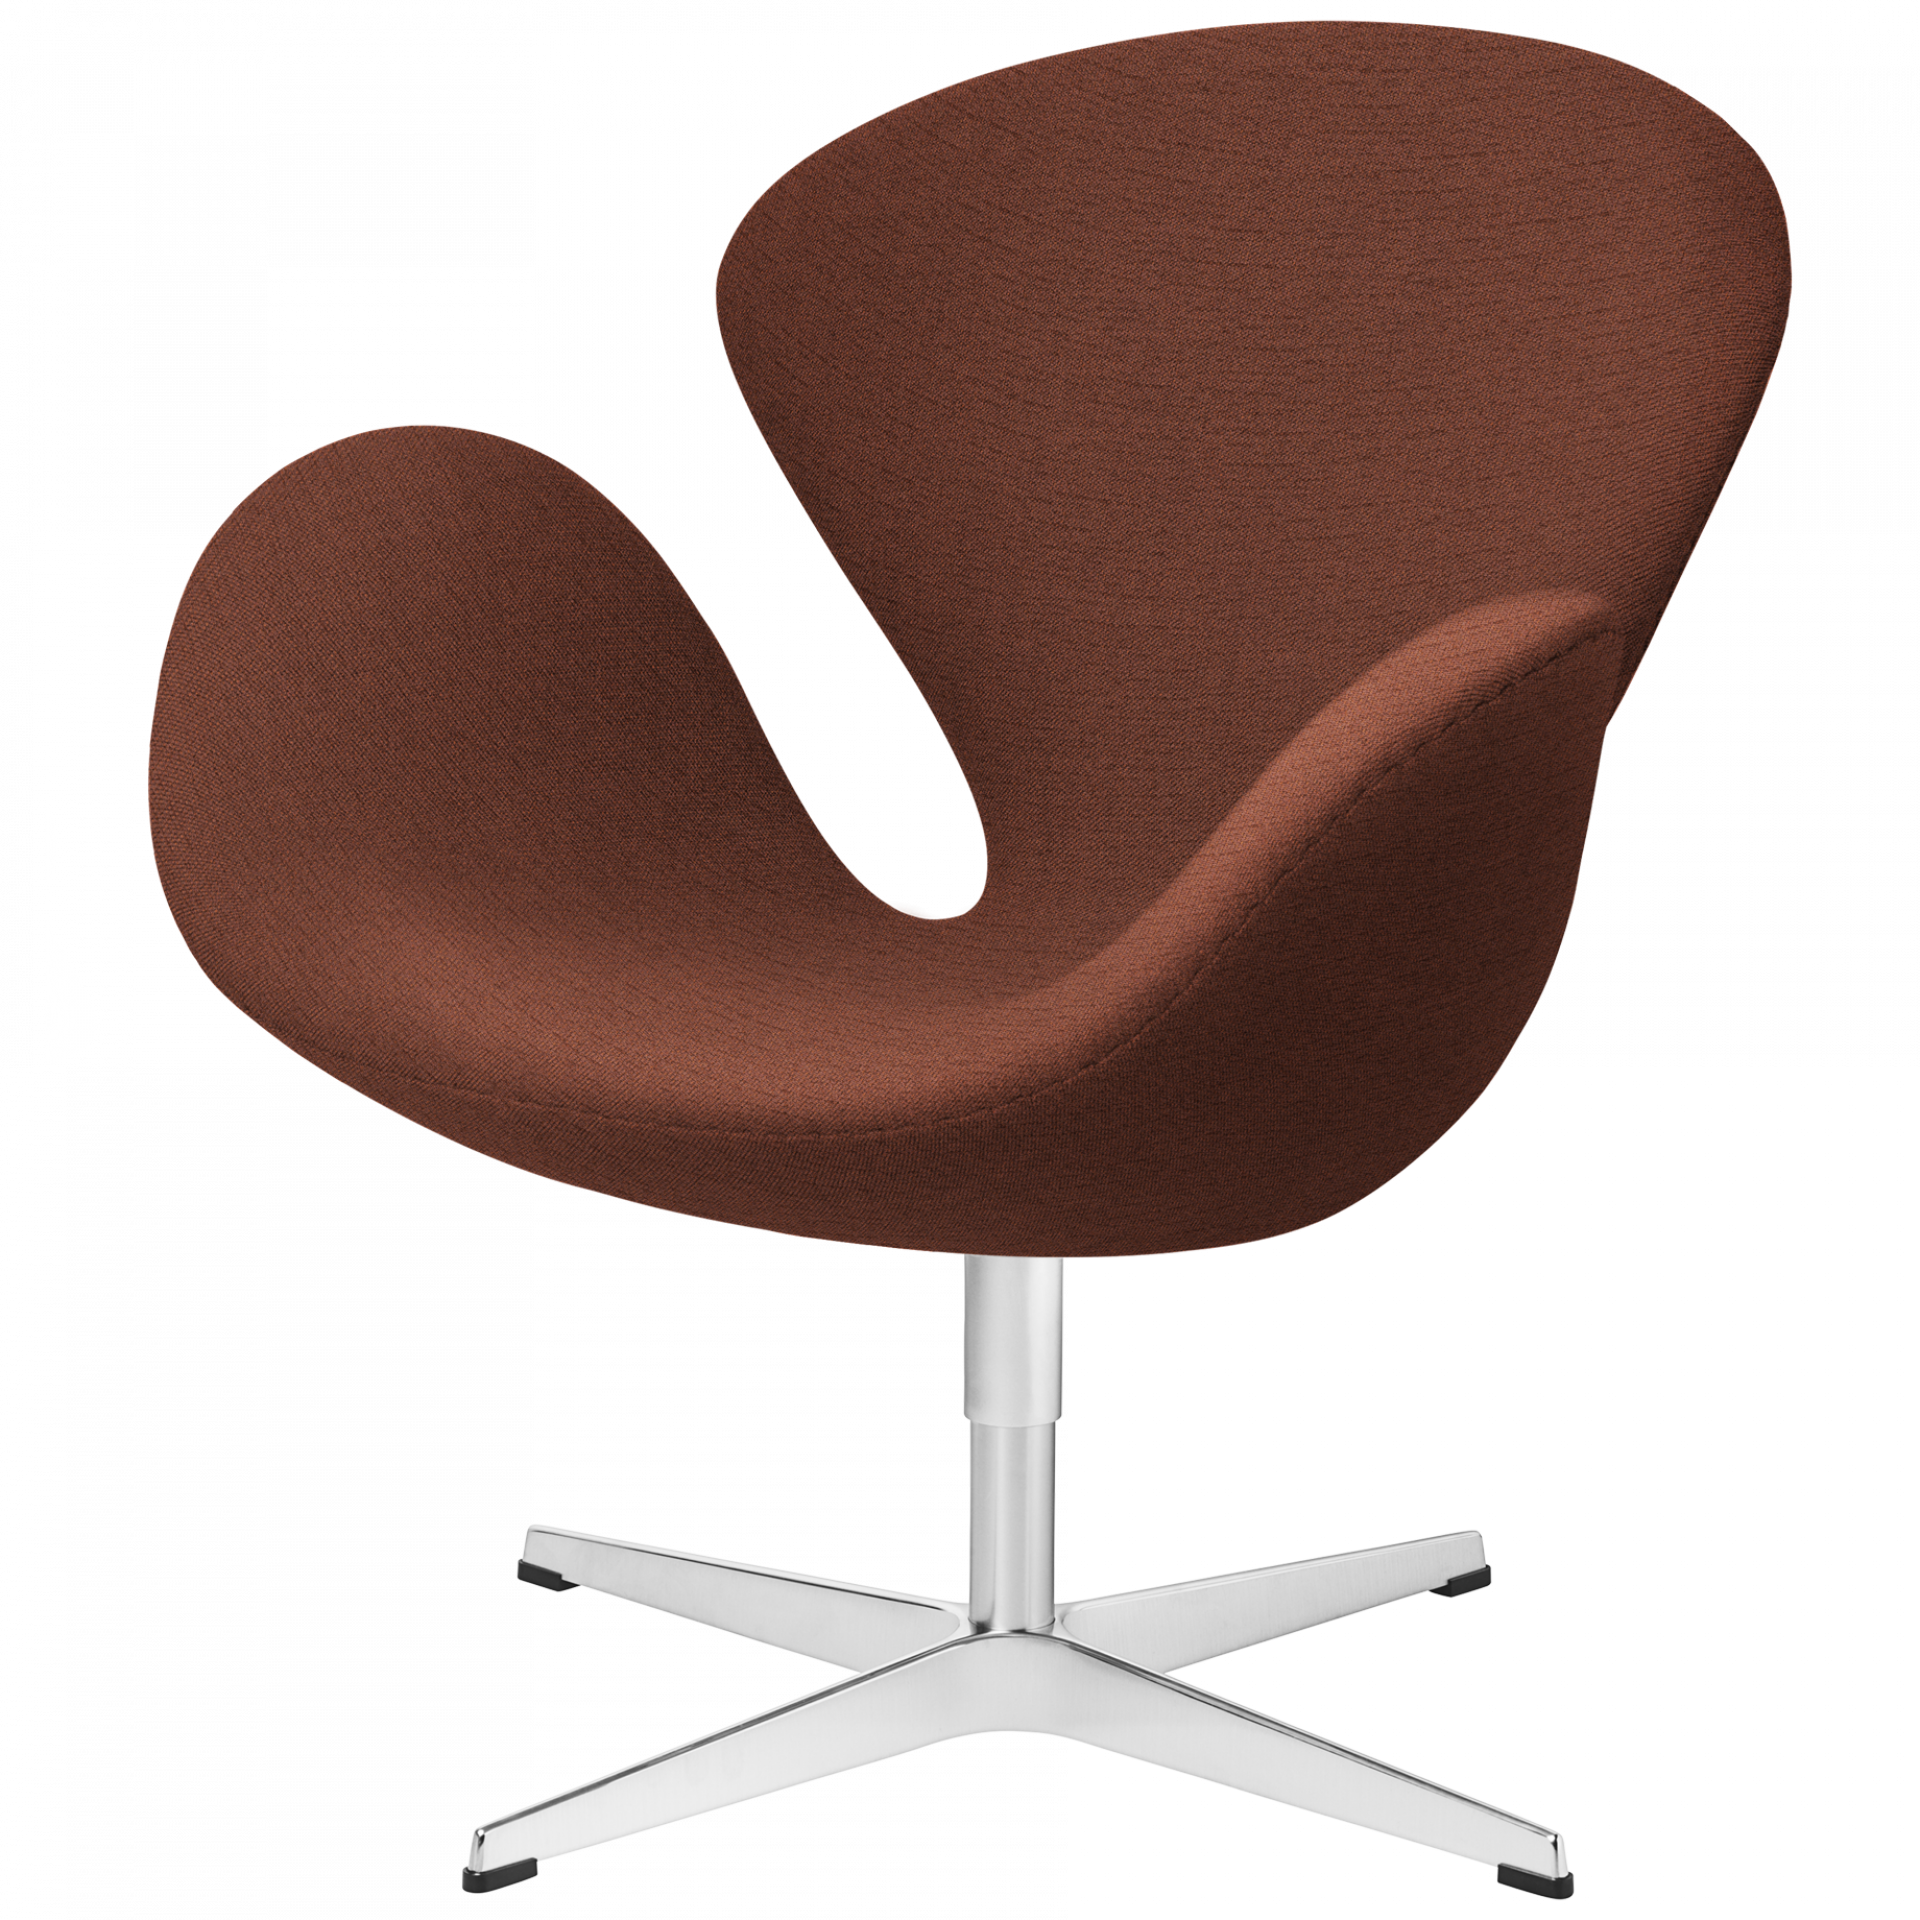 The Swan easy chair Fritz Hansen